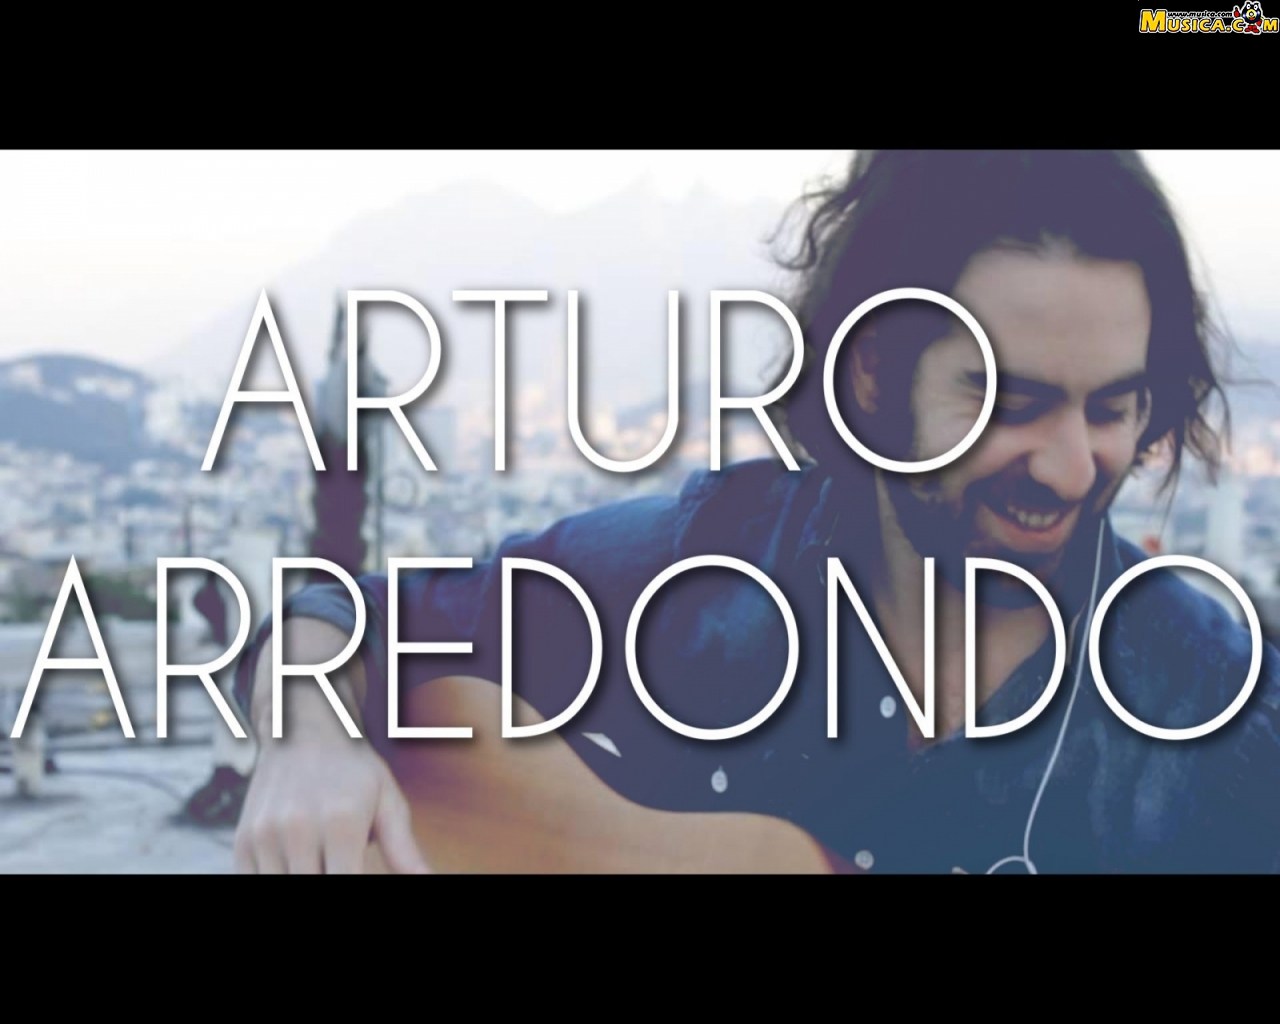 Fondo de pantalla de Arturo Arredondo